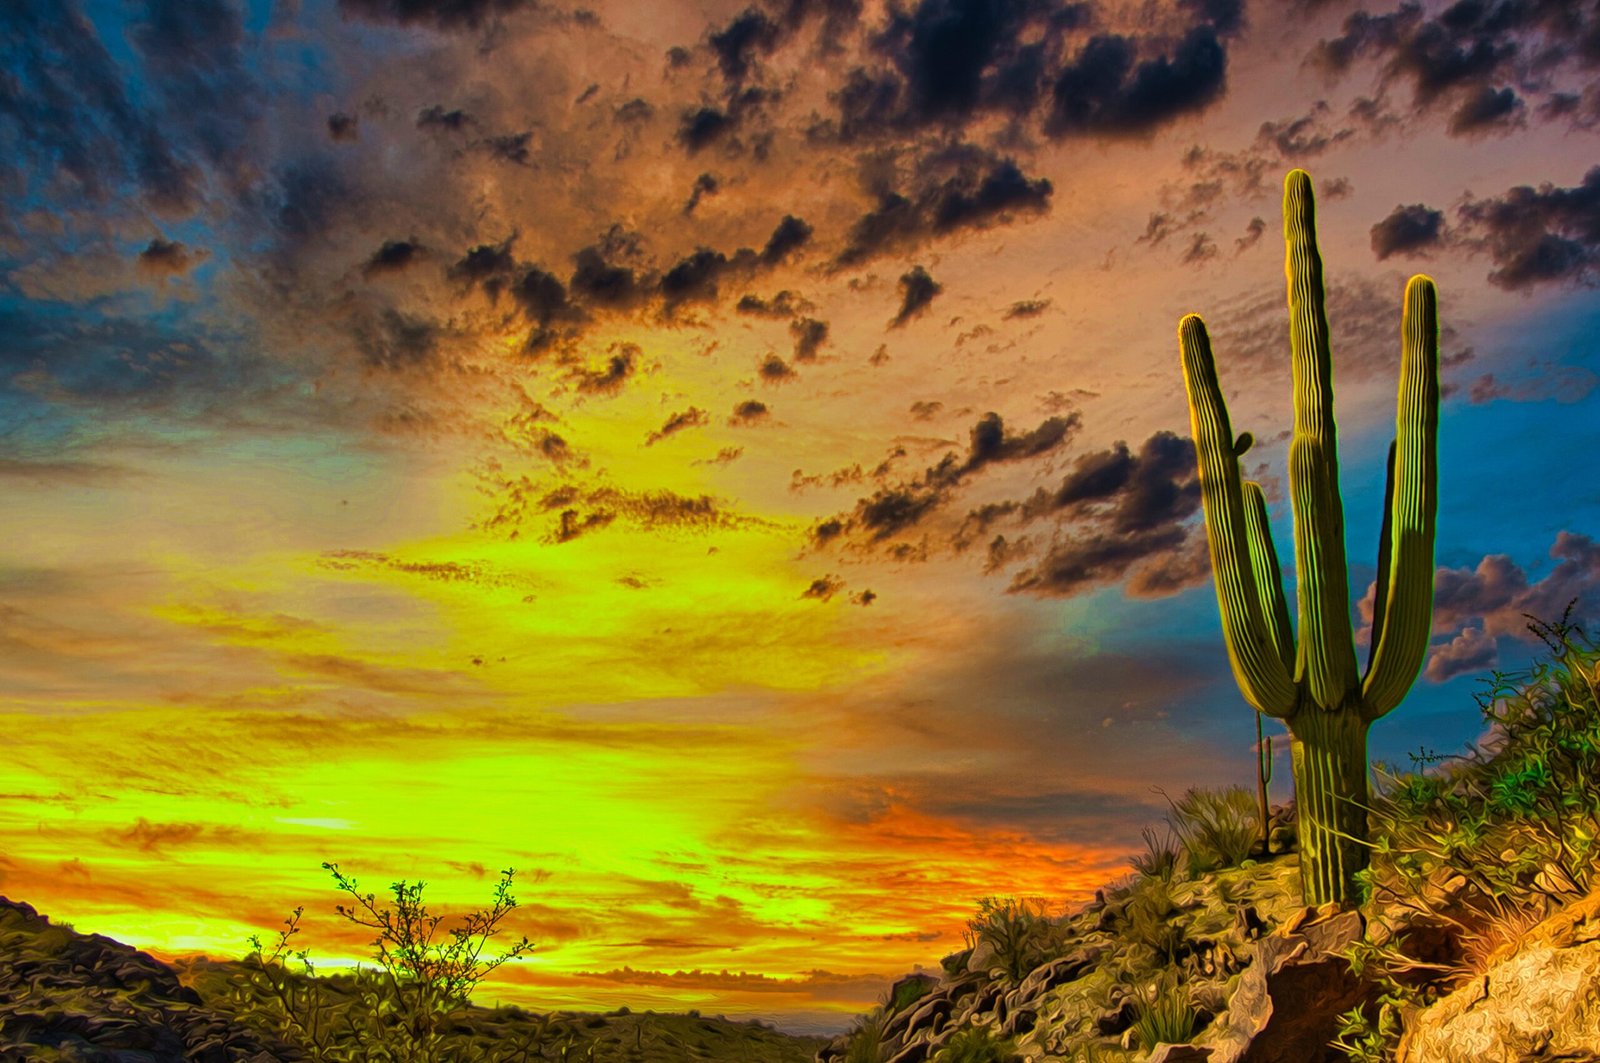 Arizona cactus in the sunset.